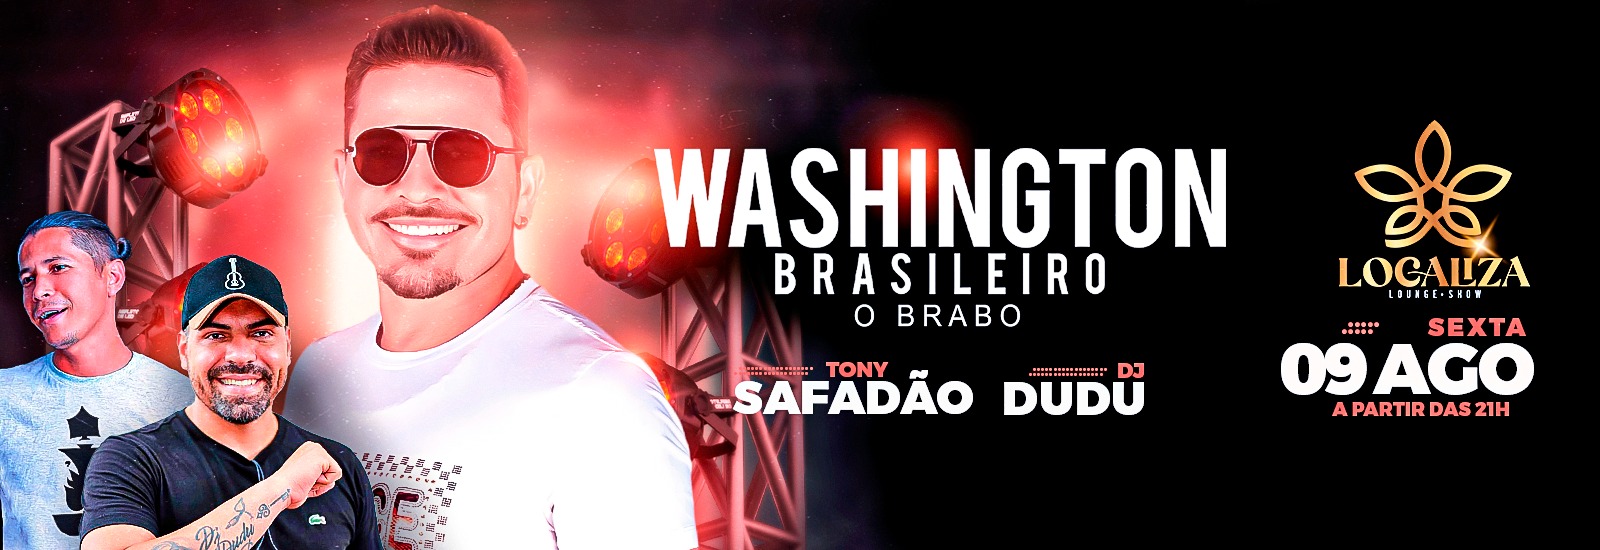 Show Washington Brasileiro em Brasília